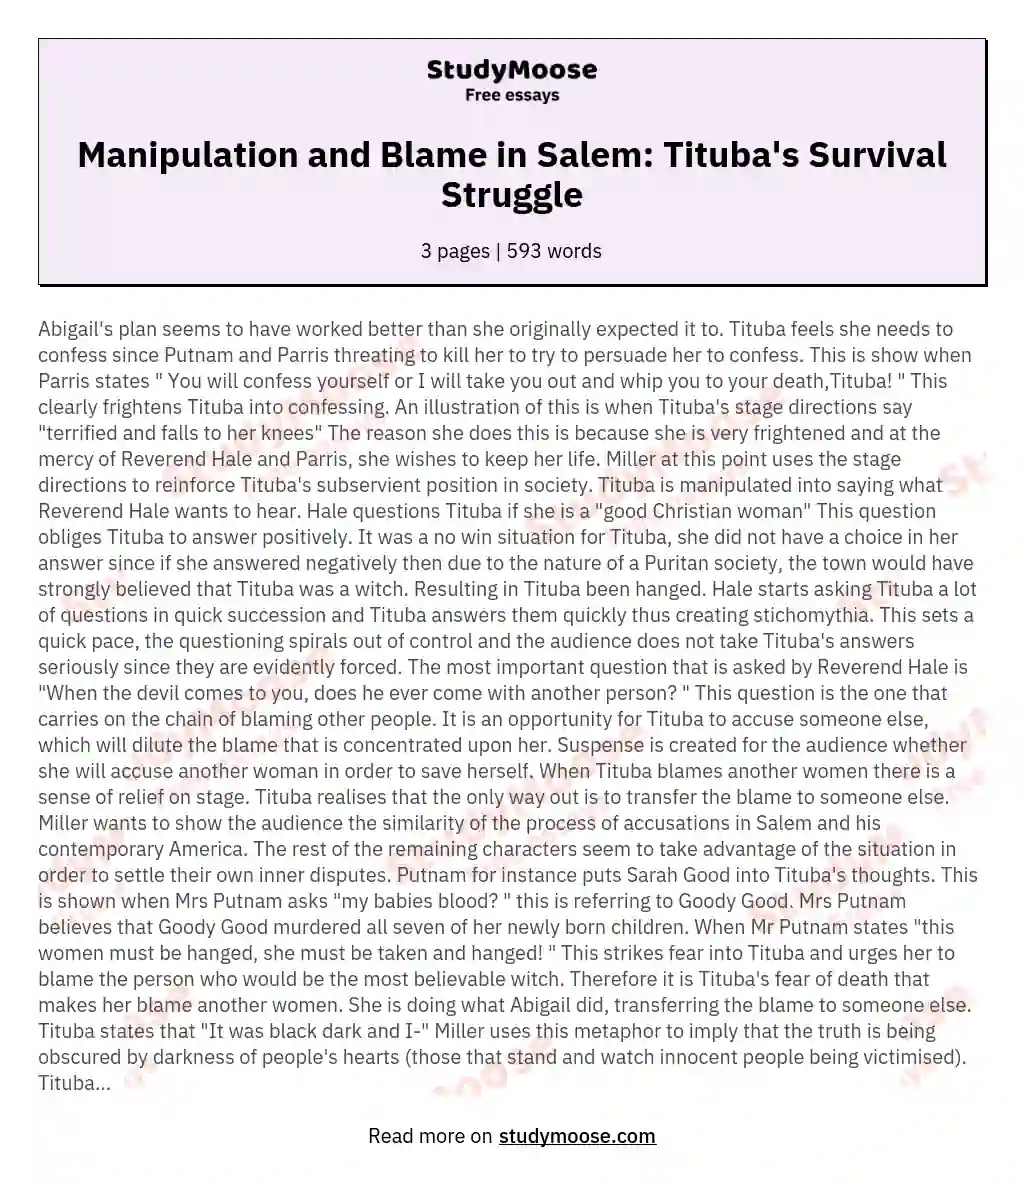 Manipulation and Blame in Salem: Tituba's Survival Struggle essay